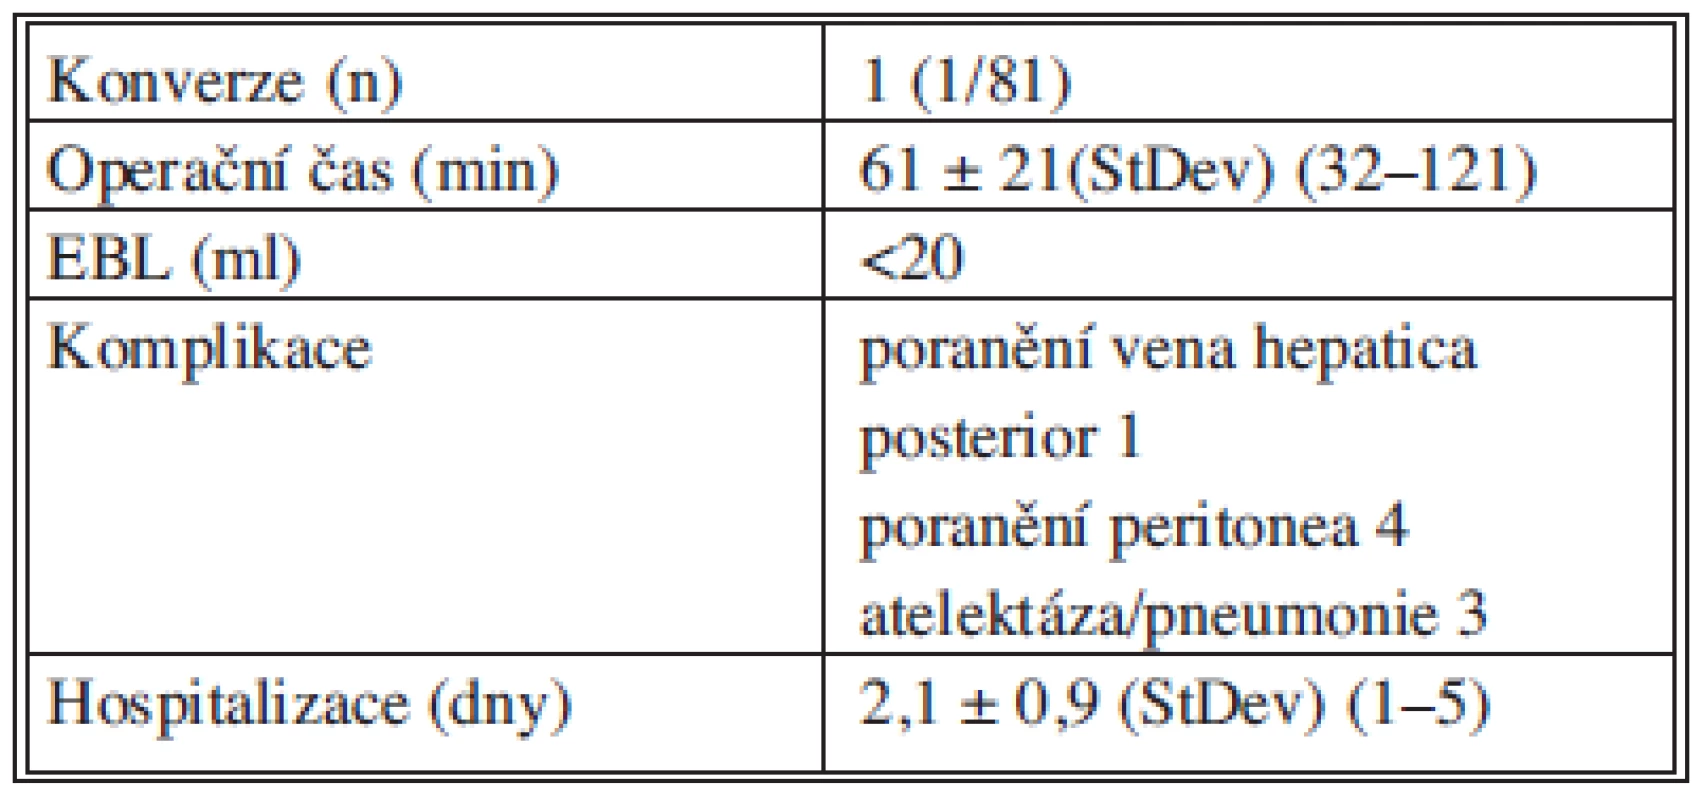 Vybrané operační a perioperační parametry
Tab. 3: Selected operative and peri-operative parameters